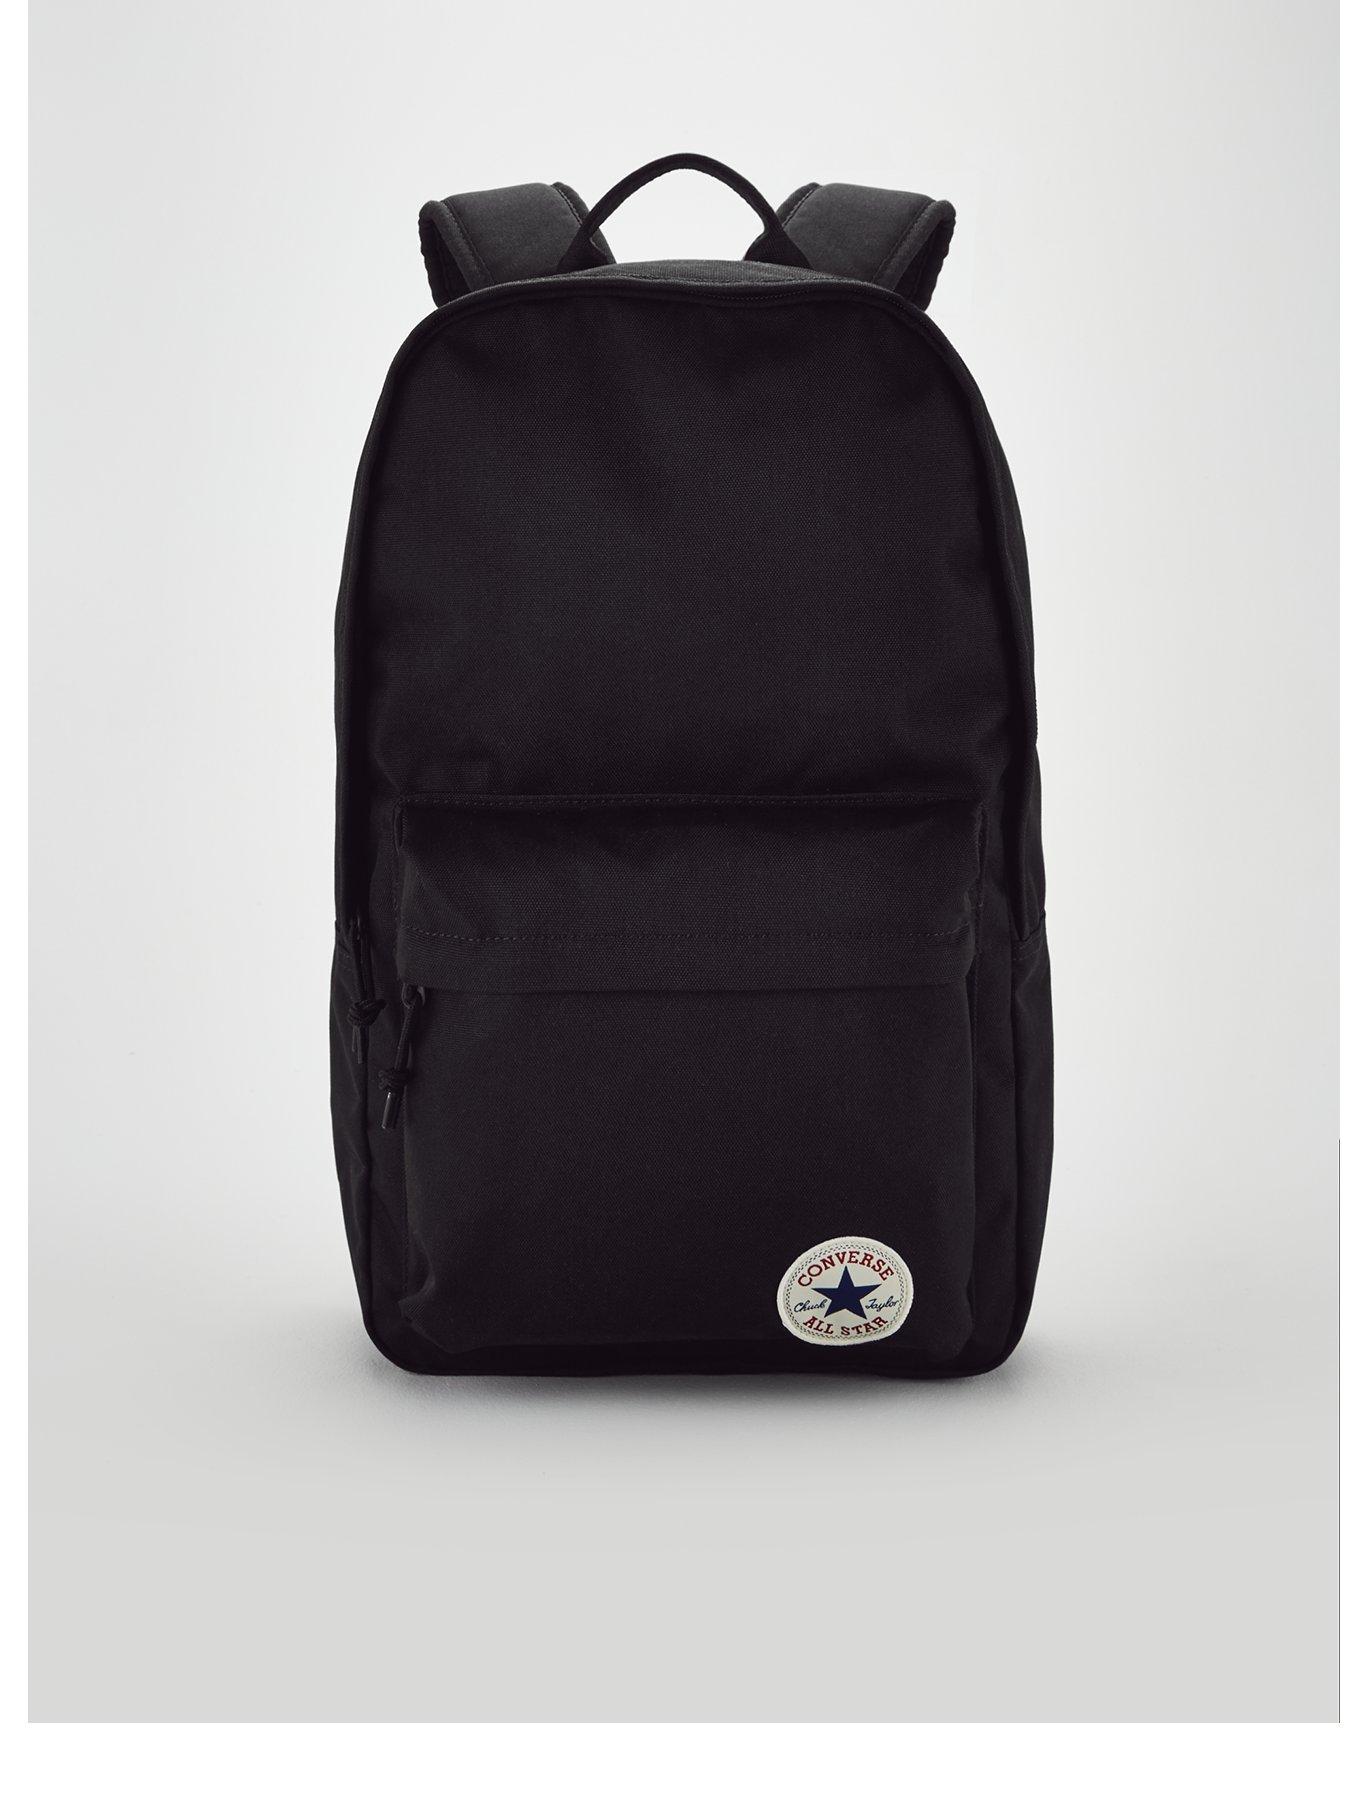 converse edc backpack